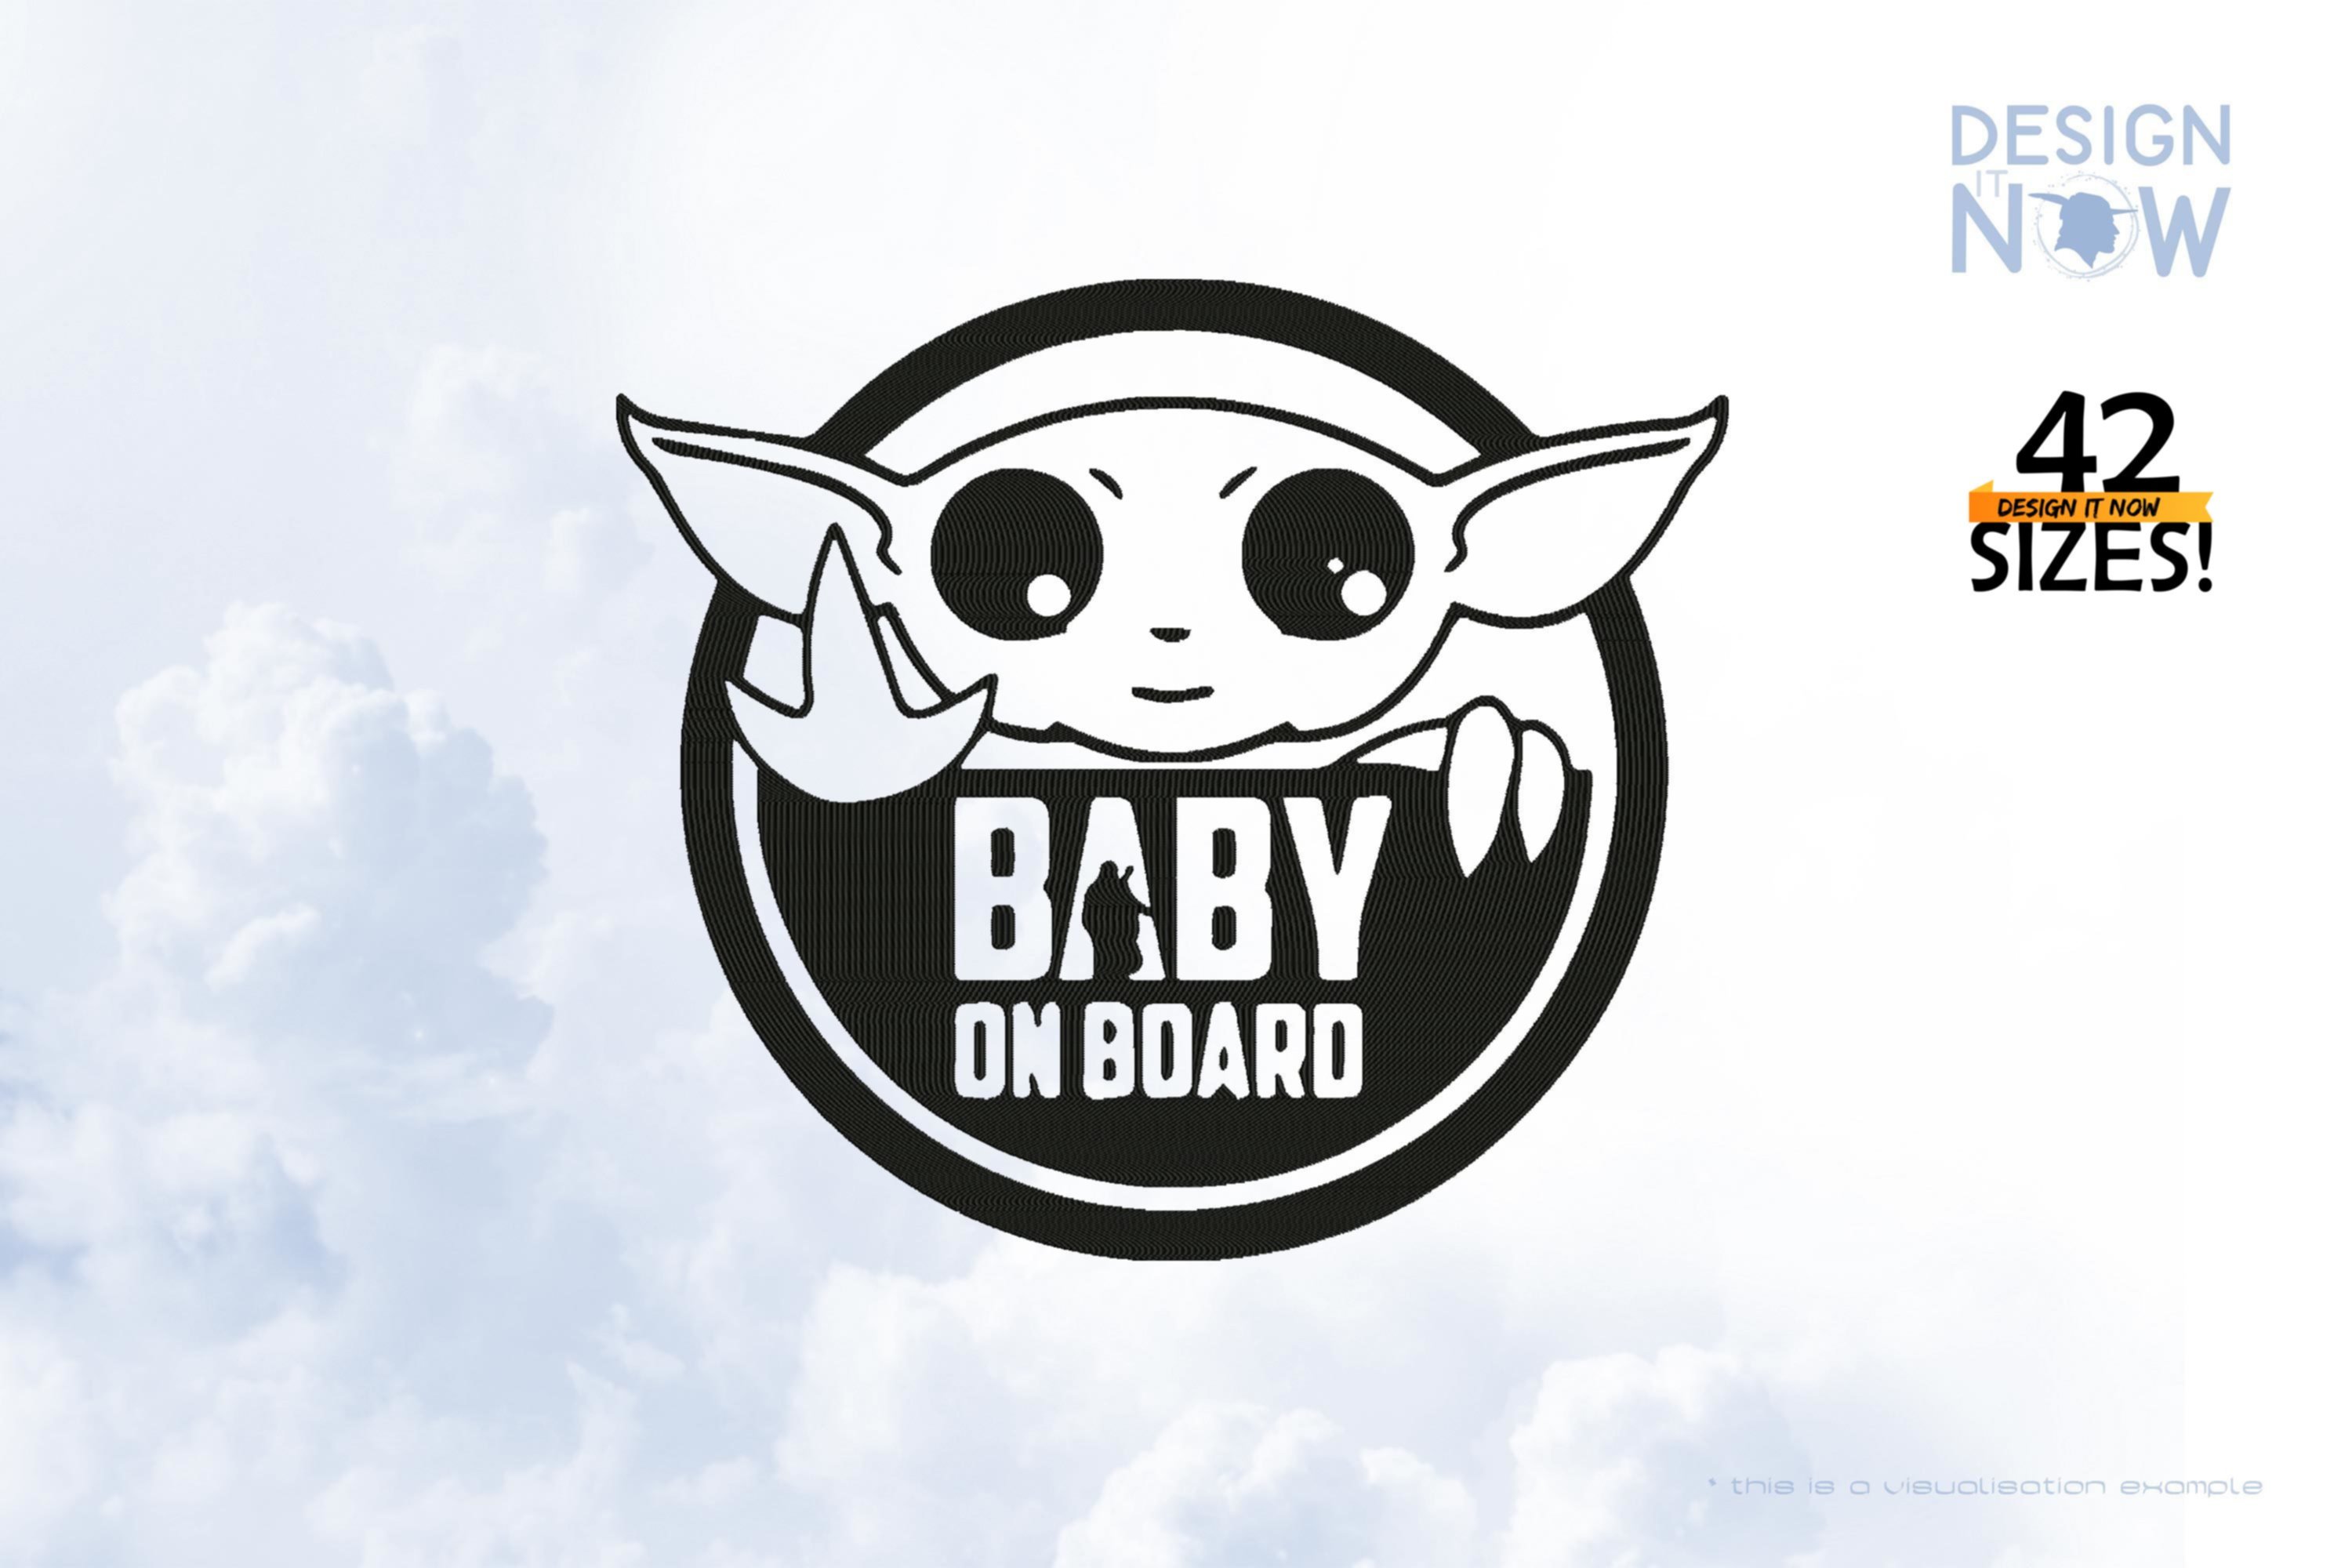 Tribute To Fictional Character Grogu aka Baby Yoda (On Board)